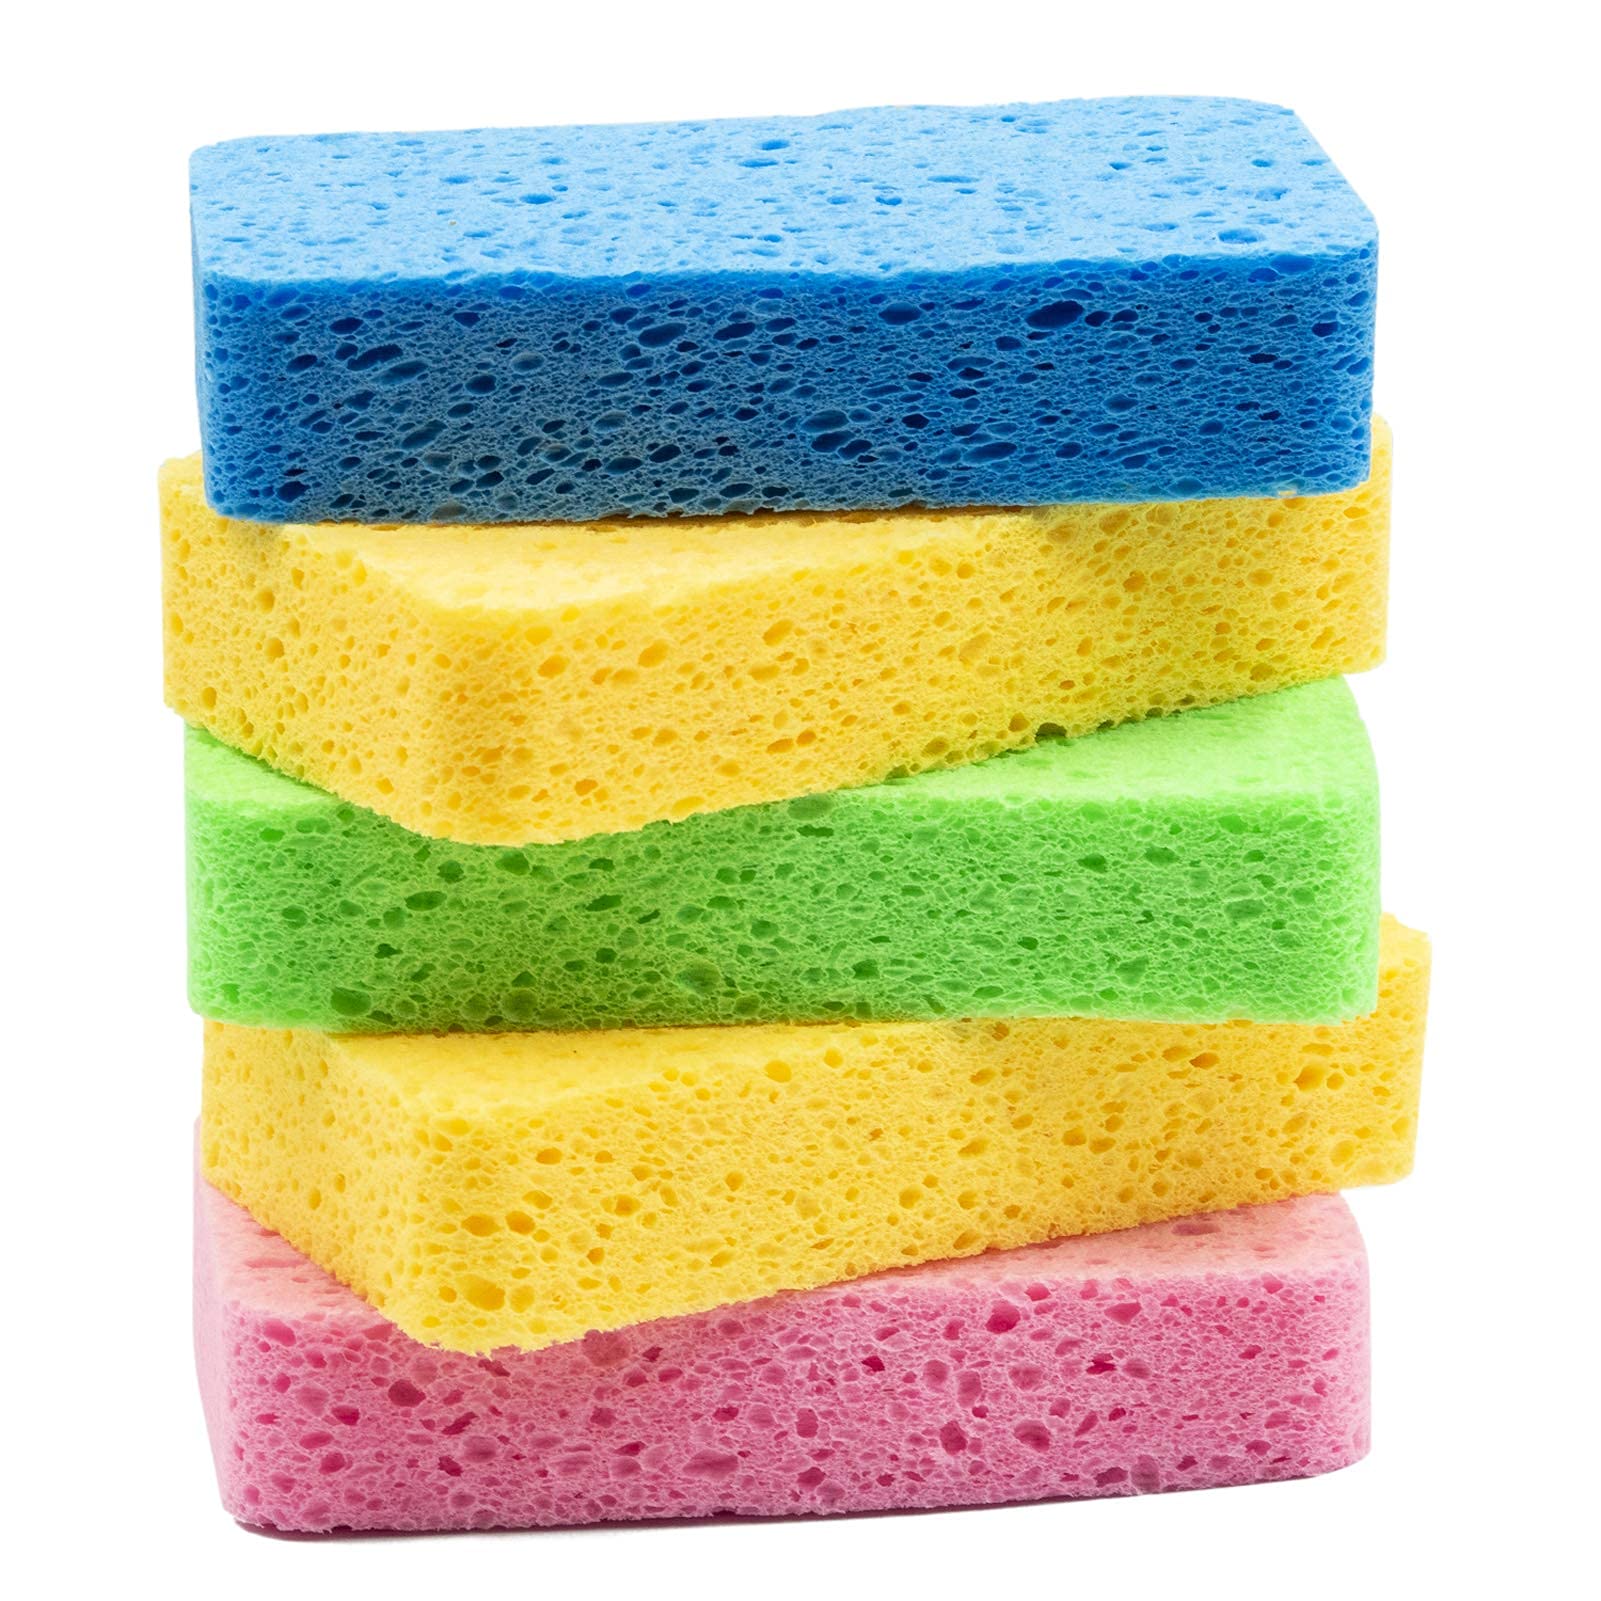 Sponge, Scrubber, Nylon, Green and Yellow, 4 5/8'' x 3